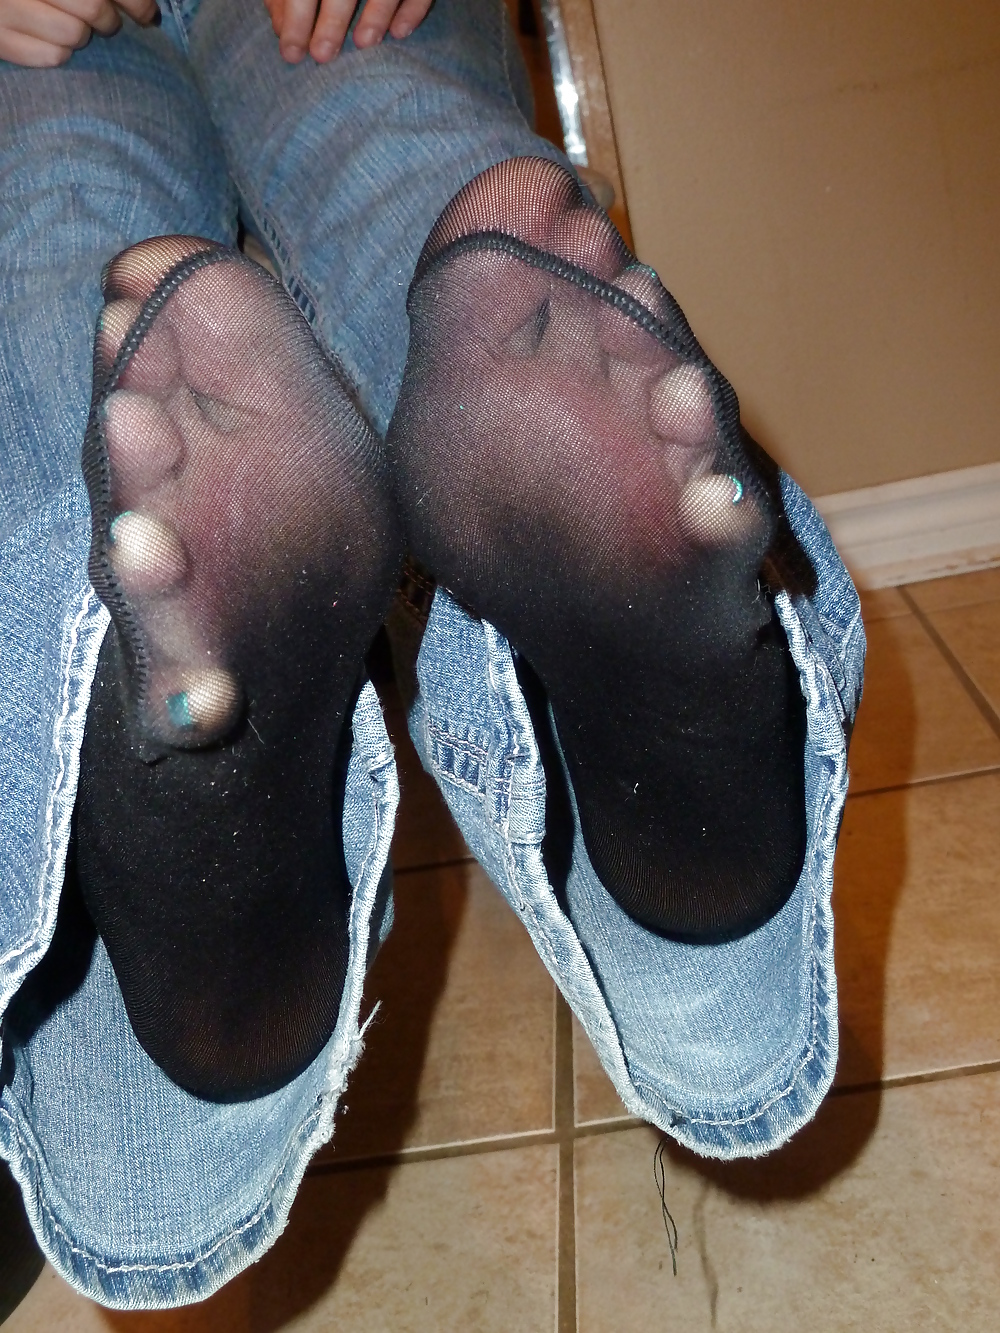 Babysitter stocking feet #14884380